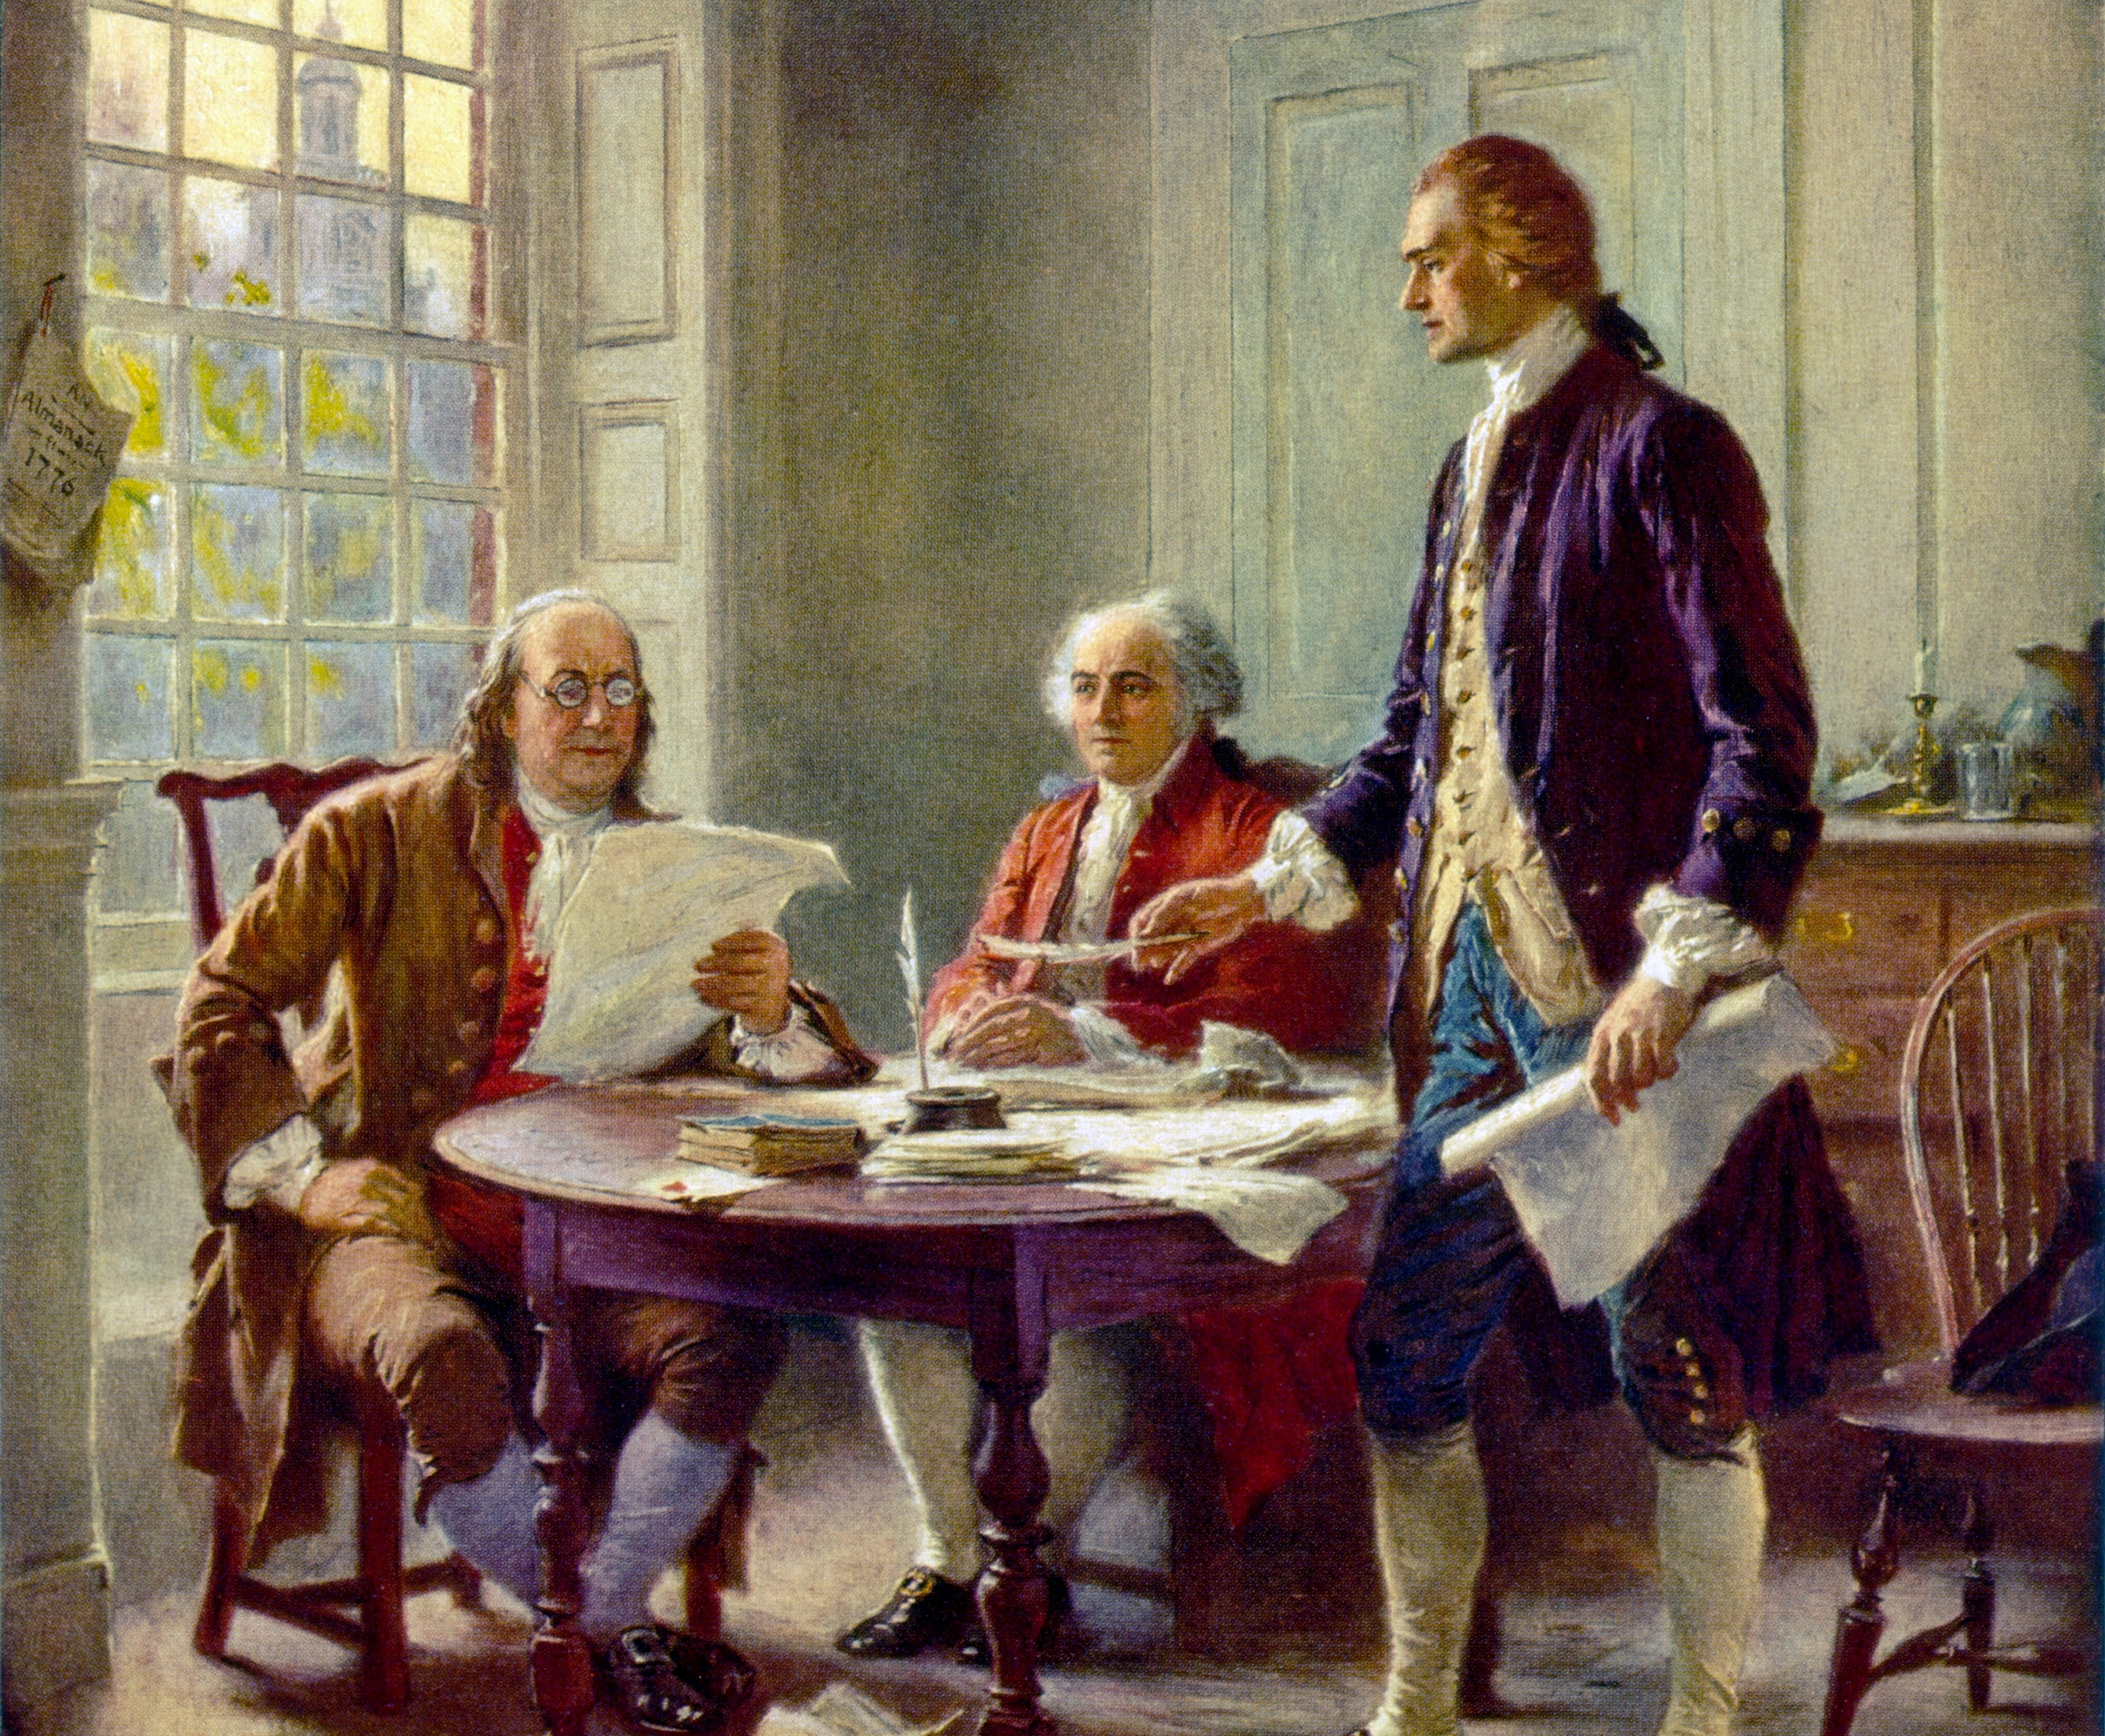 Franklin, Adams, and Jeffersoon